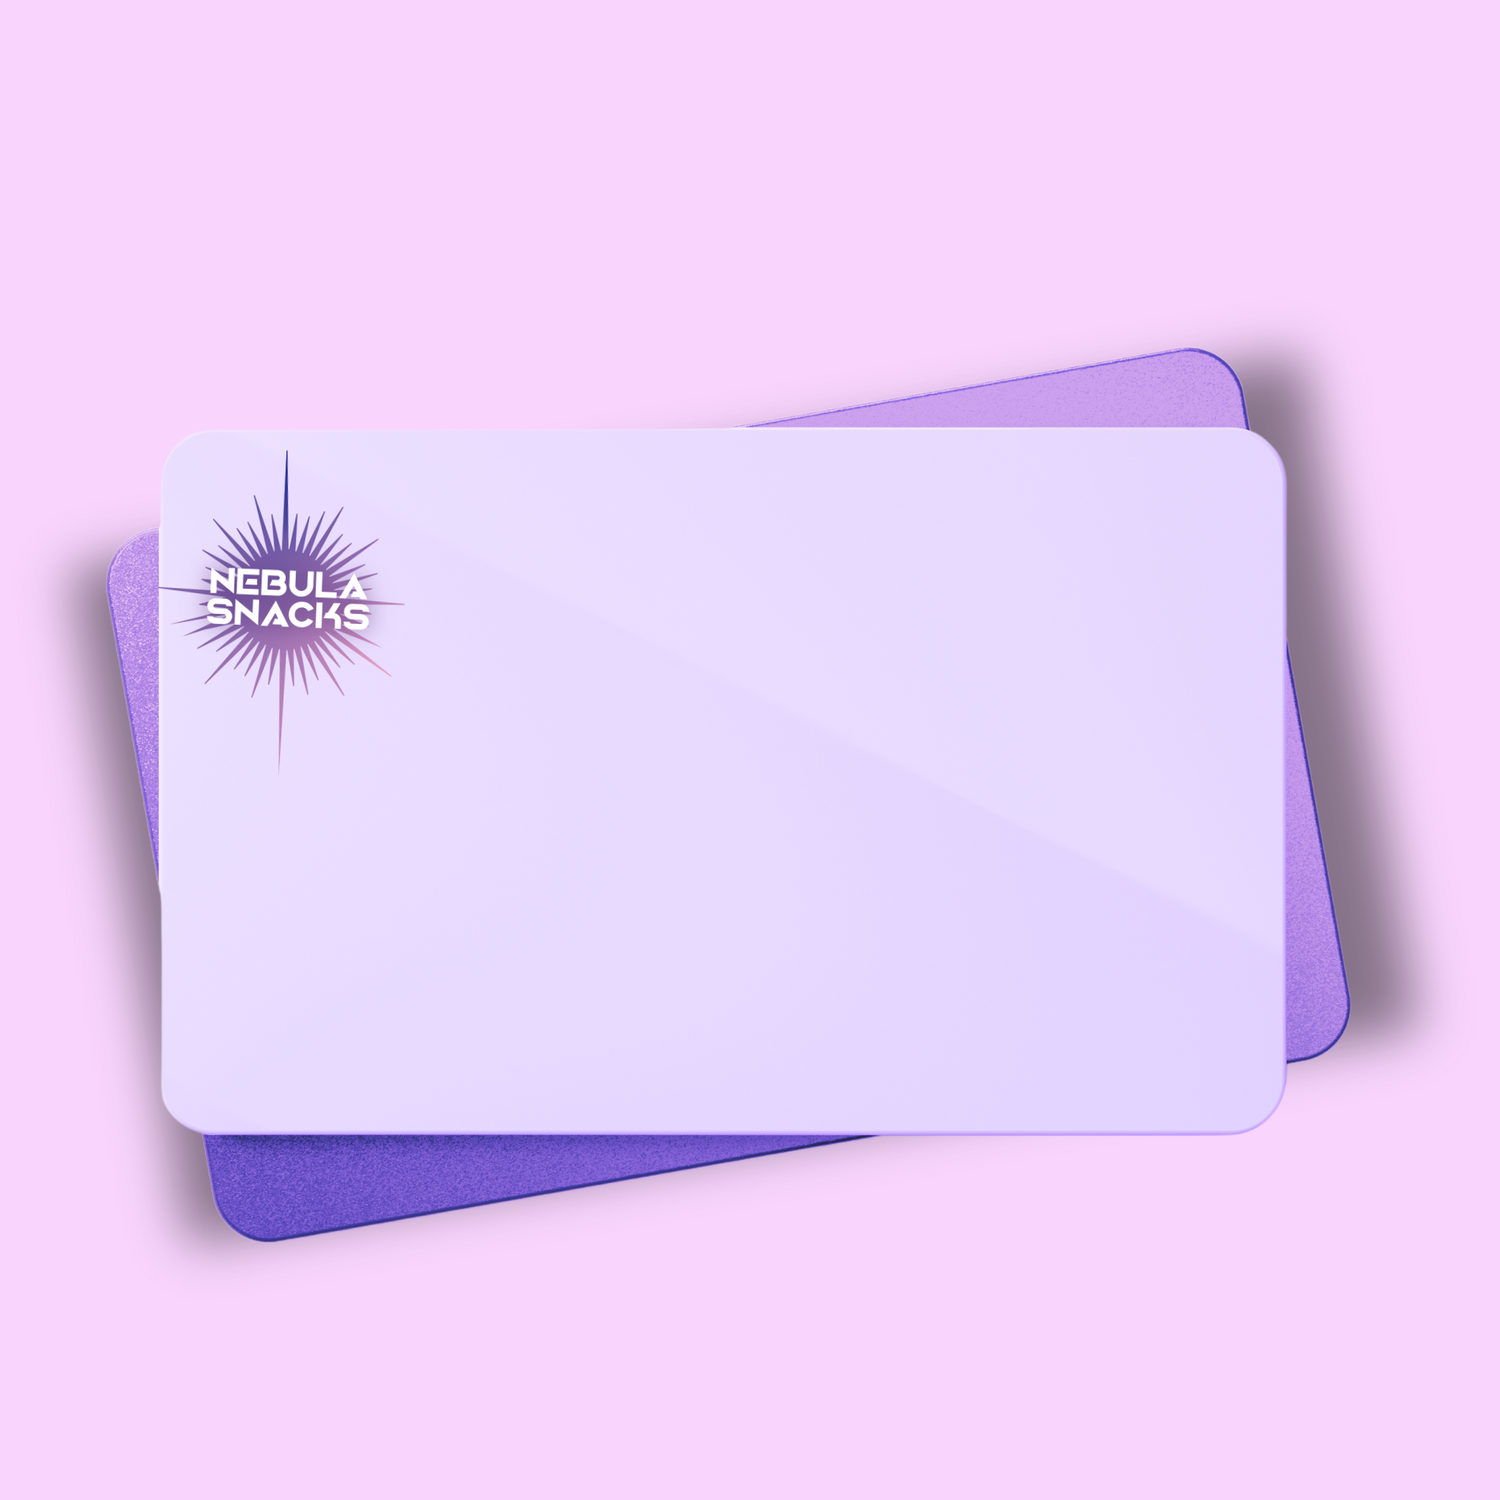 Nebula Snacks Gift Card